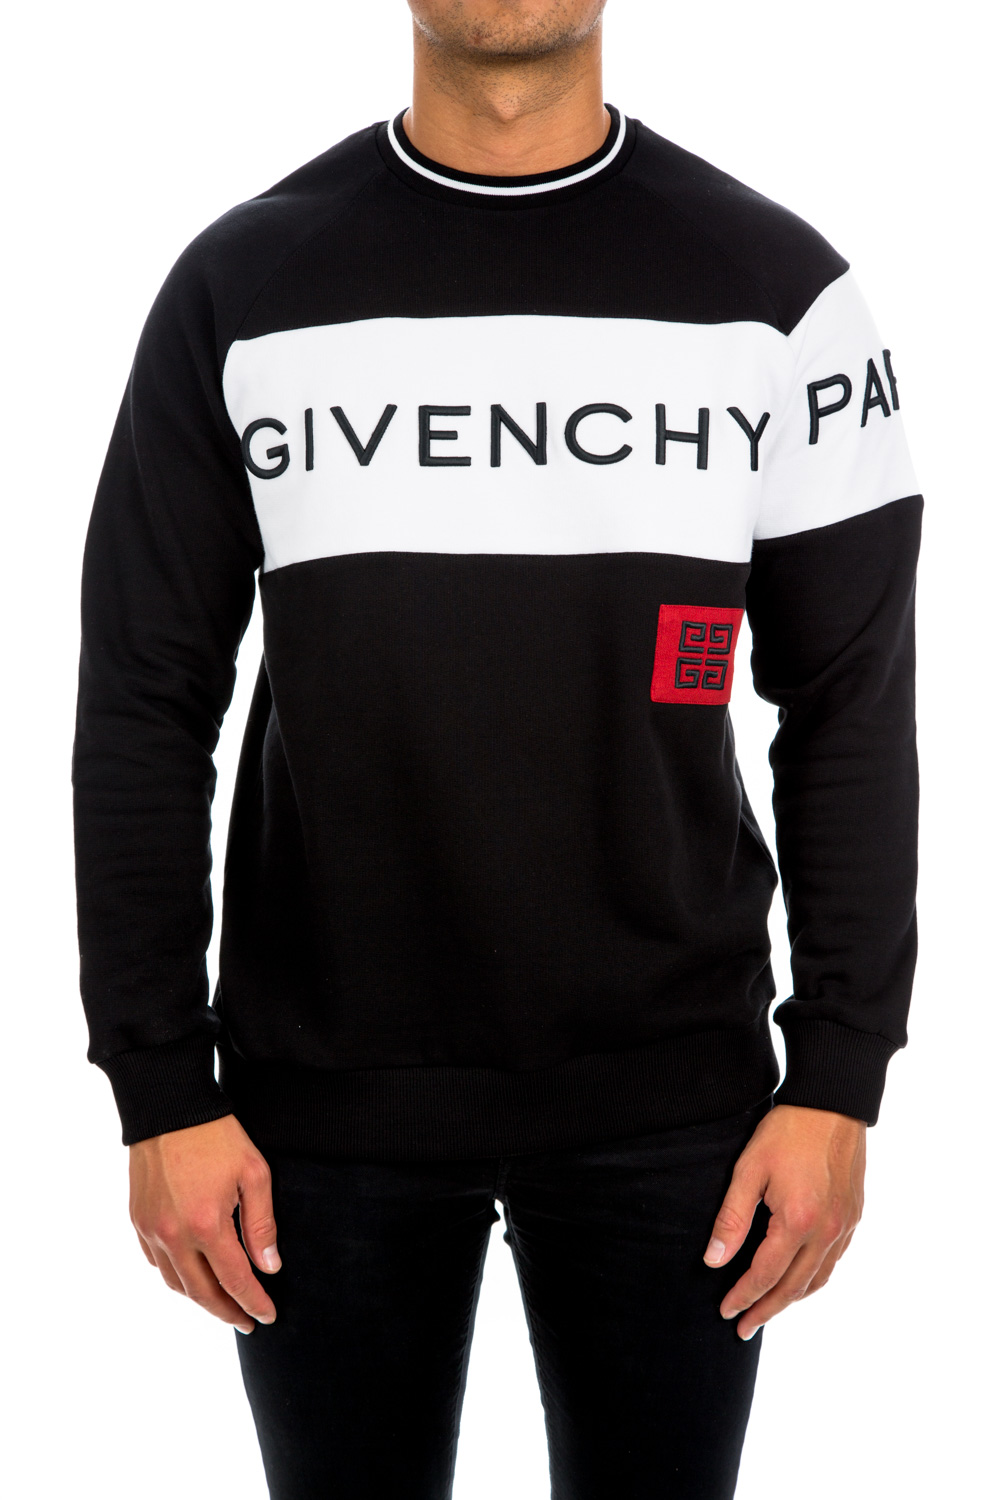 Givenchy Sweatshirt | Credomen